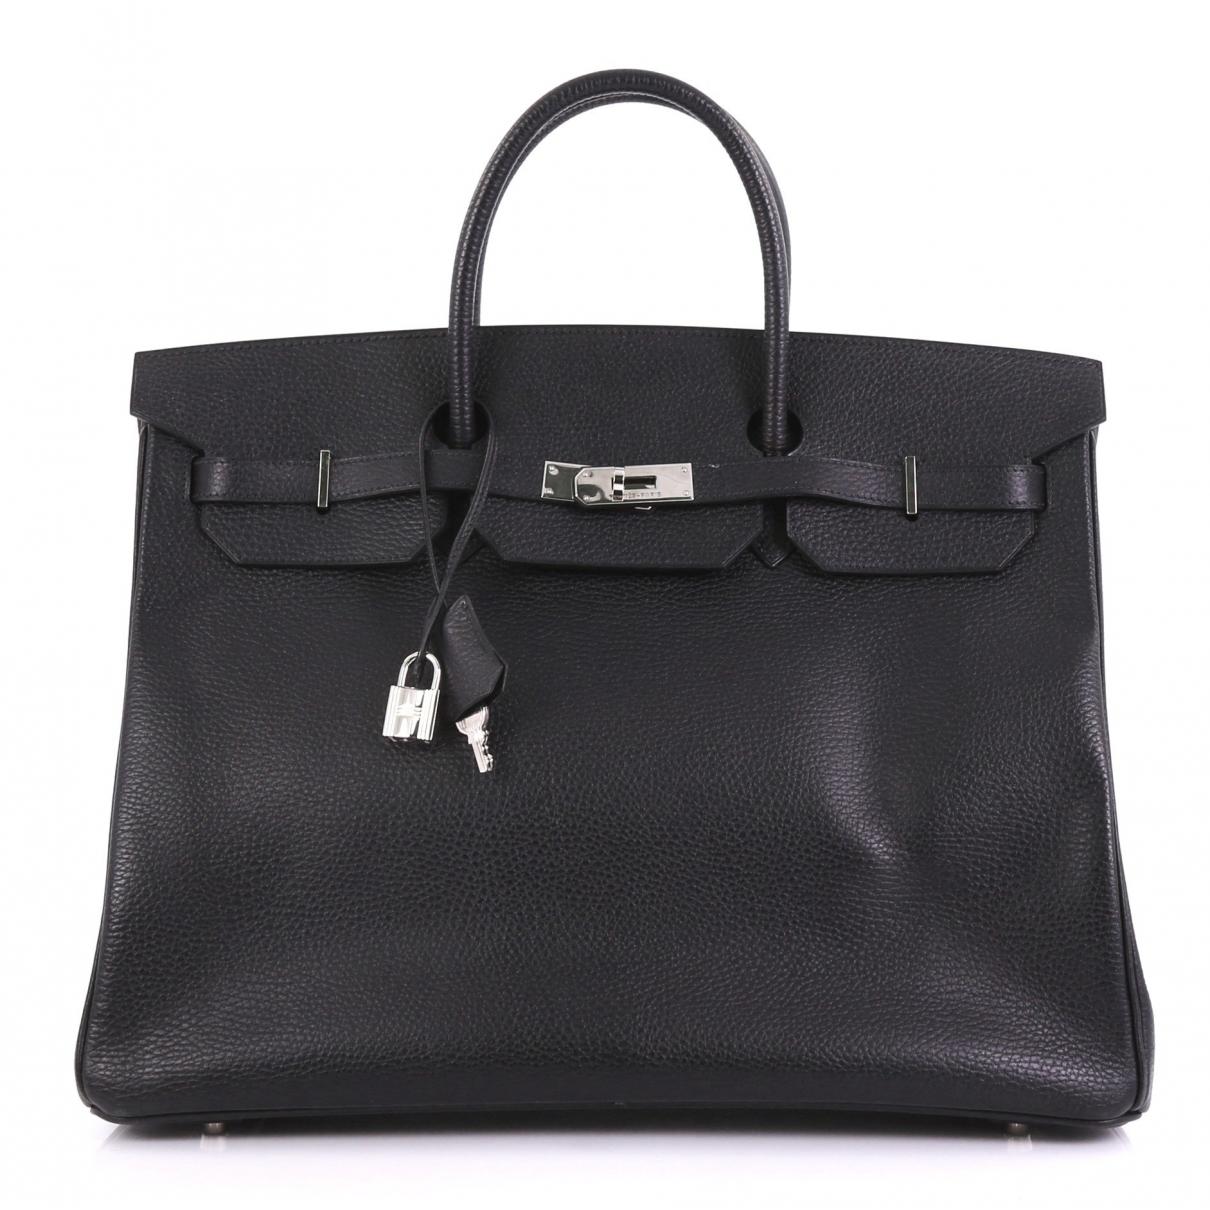 Hermès Birkin 40 Black Leather Handbag in Black - Save 2% - Lyst